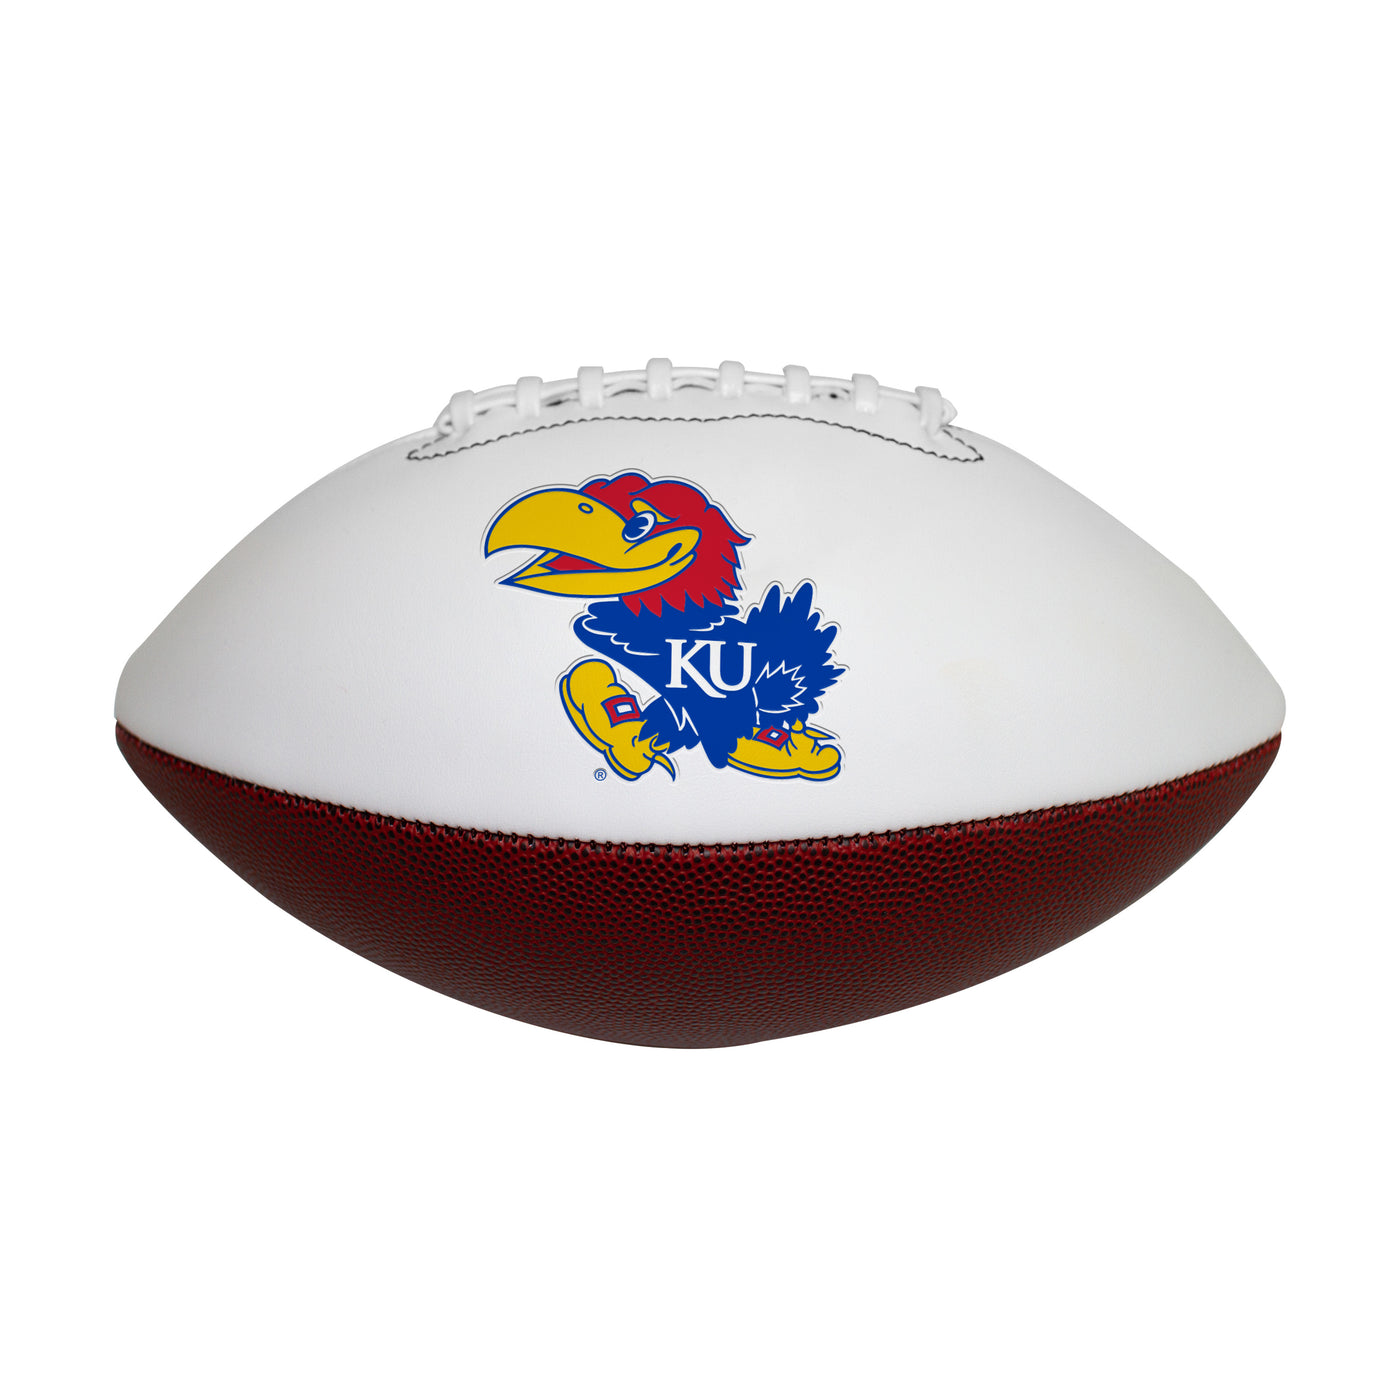 Kansas Official-Size Autograph Football